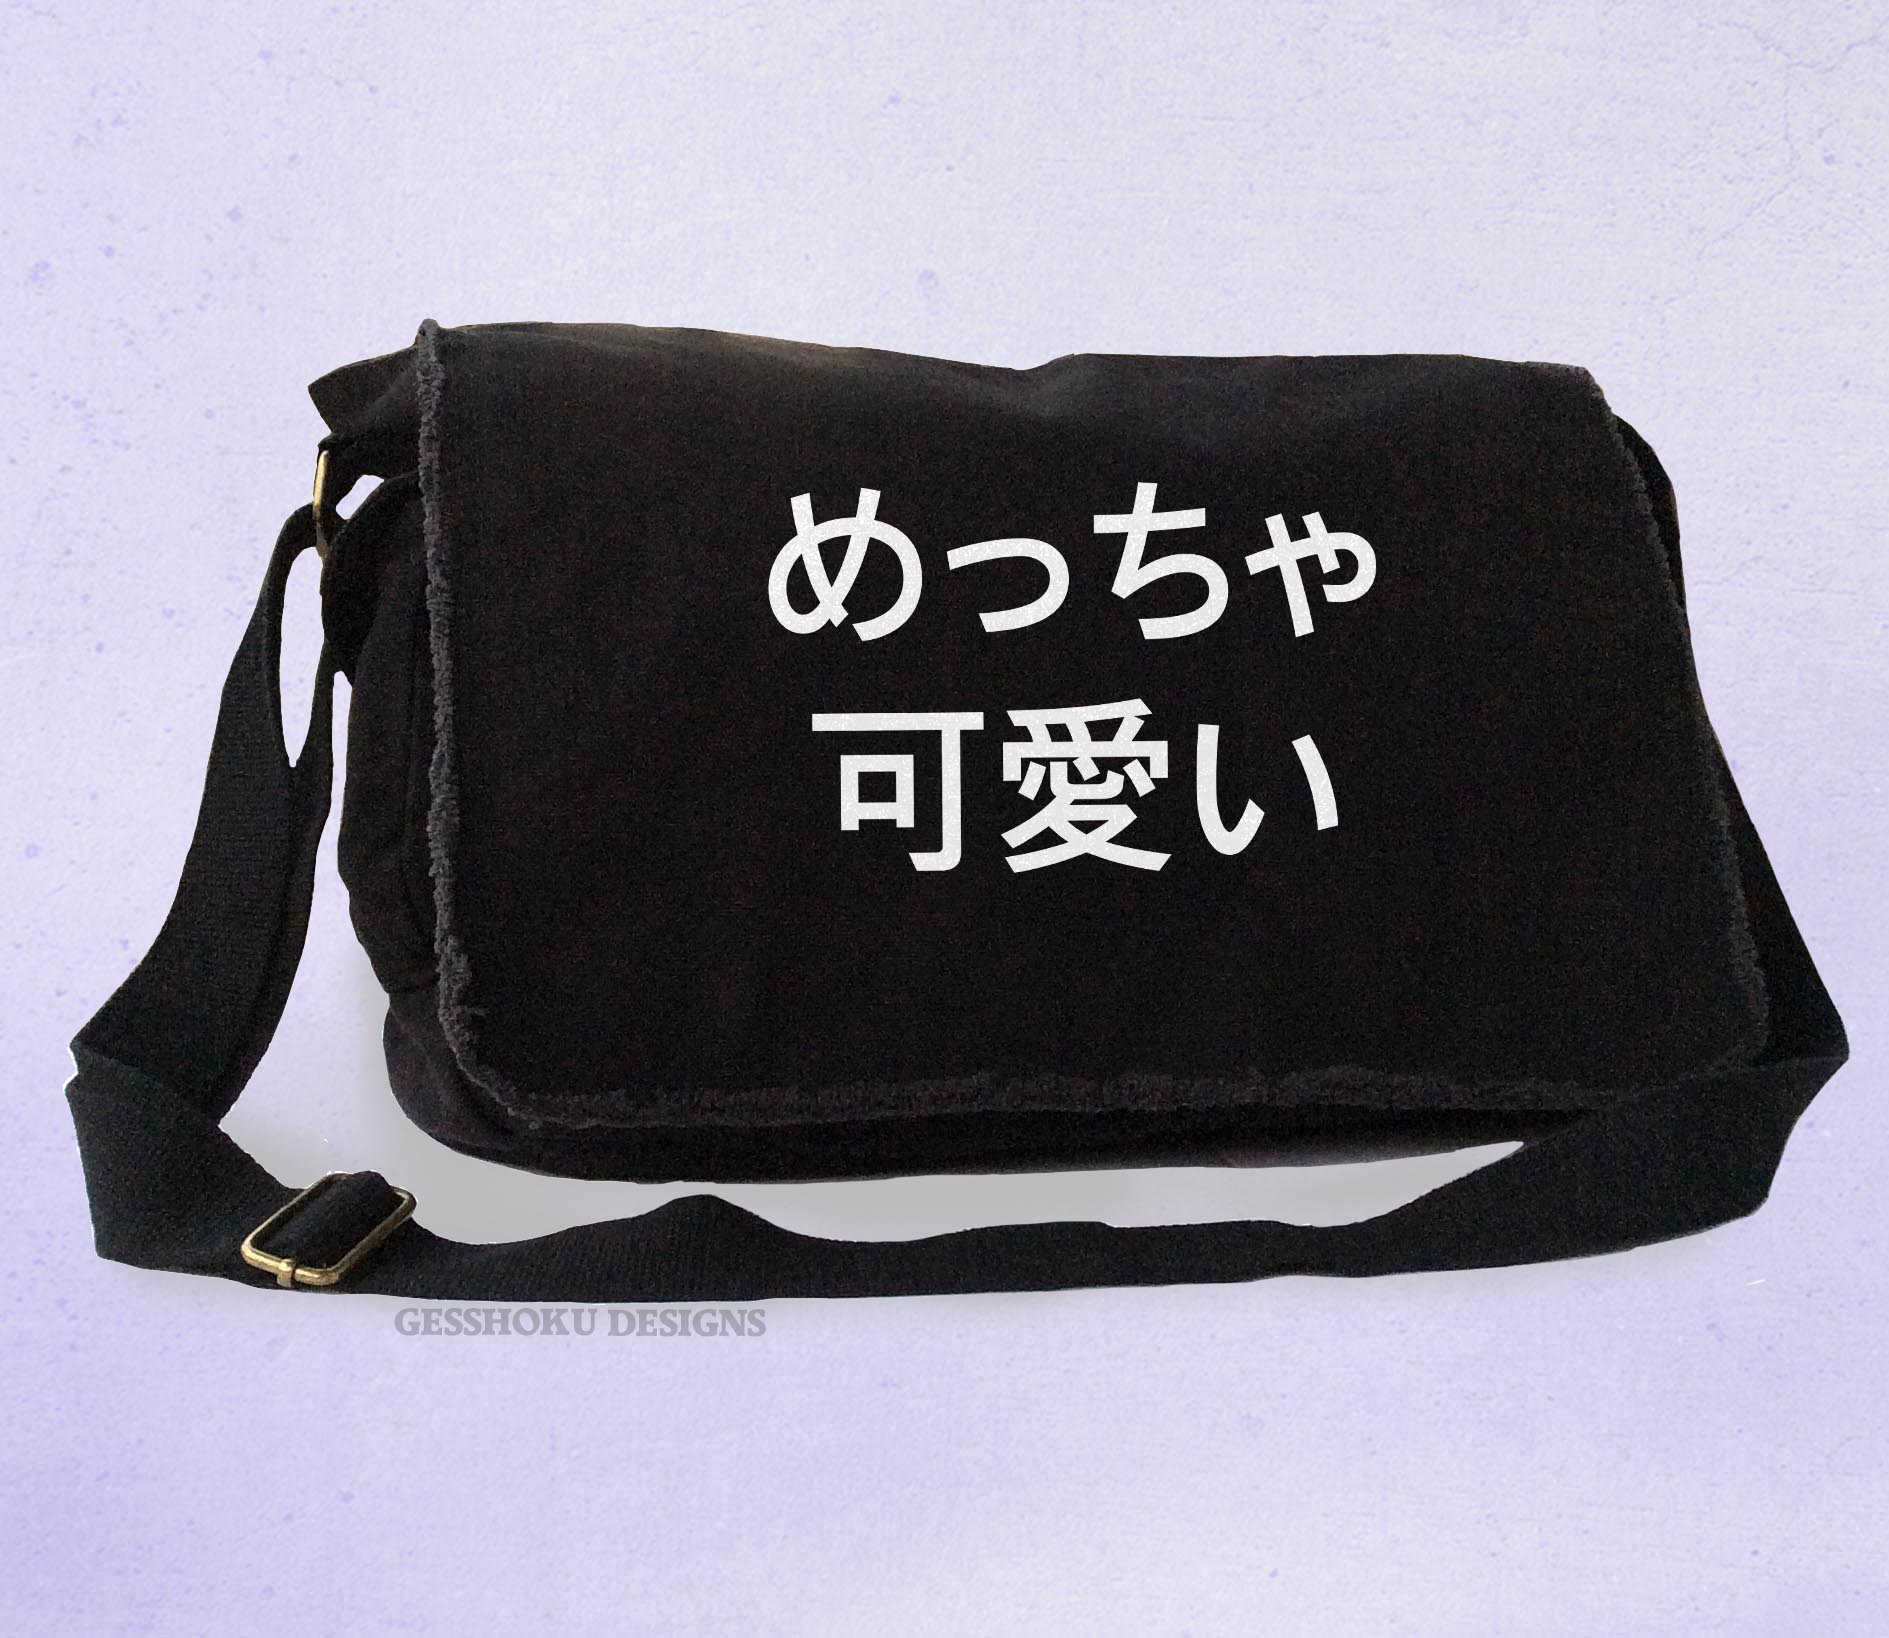 Meccha Kawaii Messenger Bag - Black